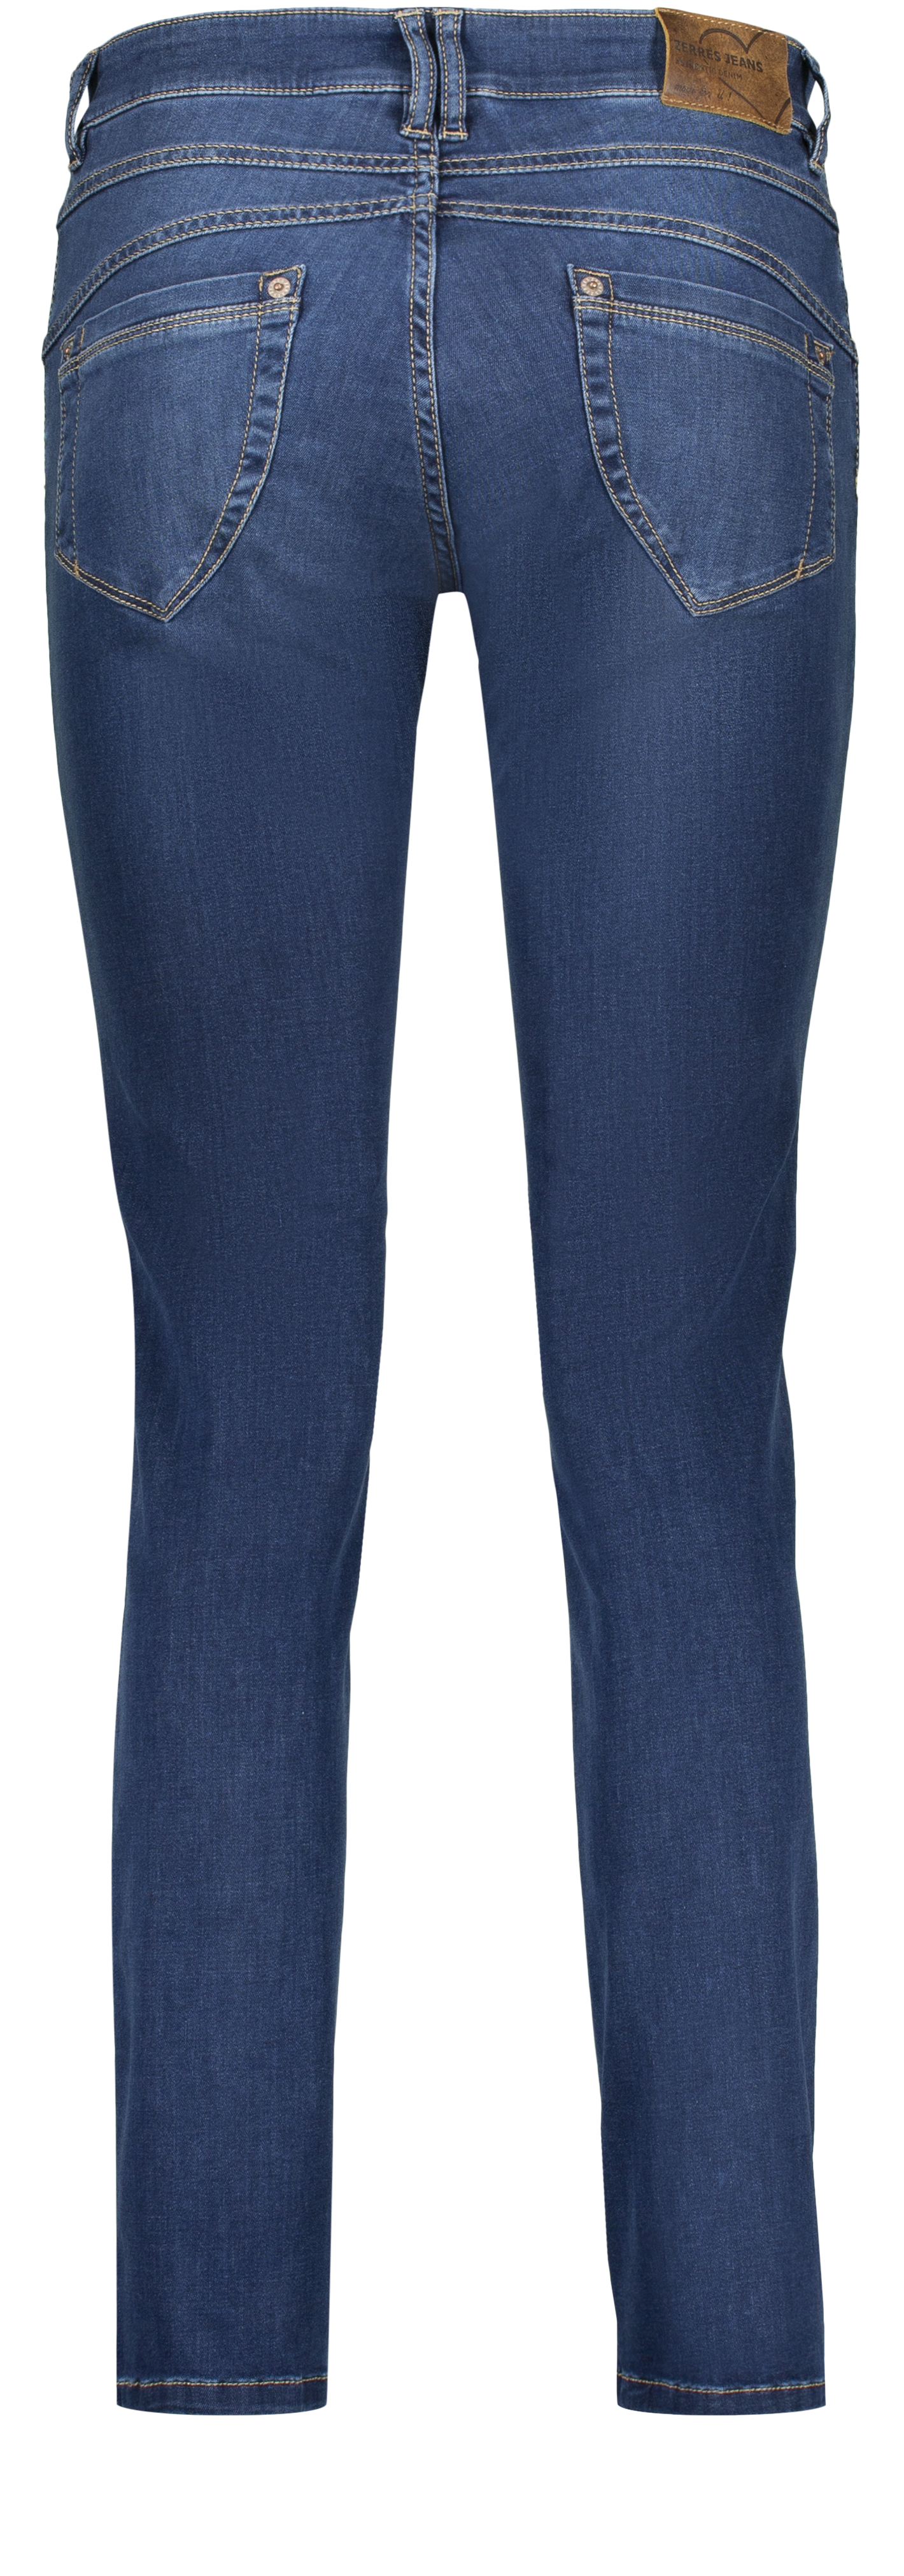 Jeans sensationnal bleu marine